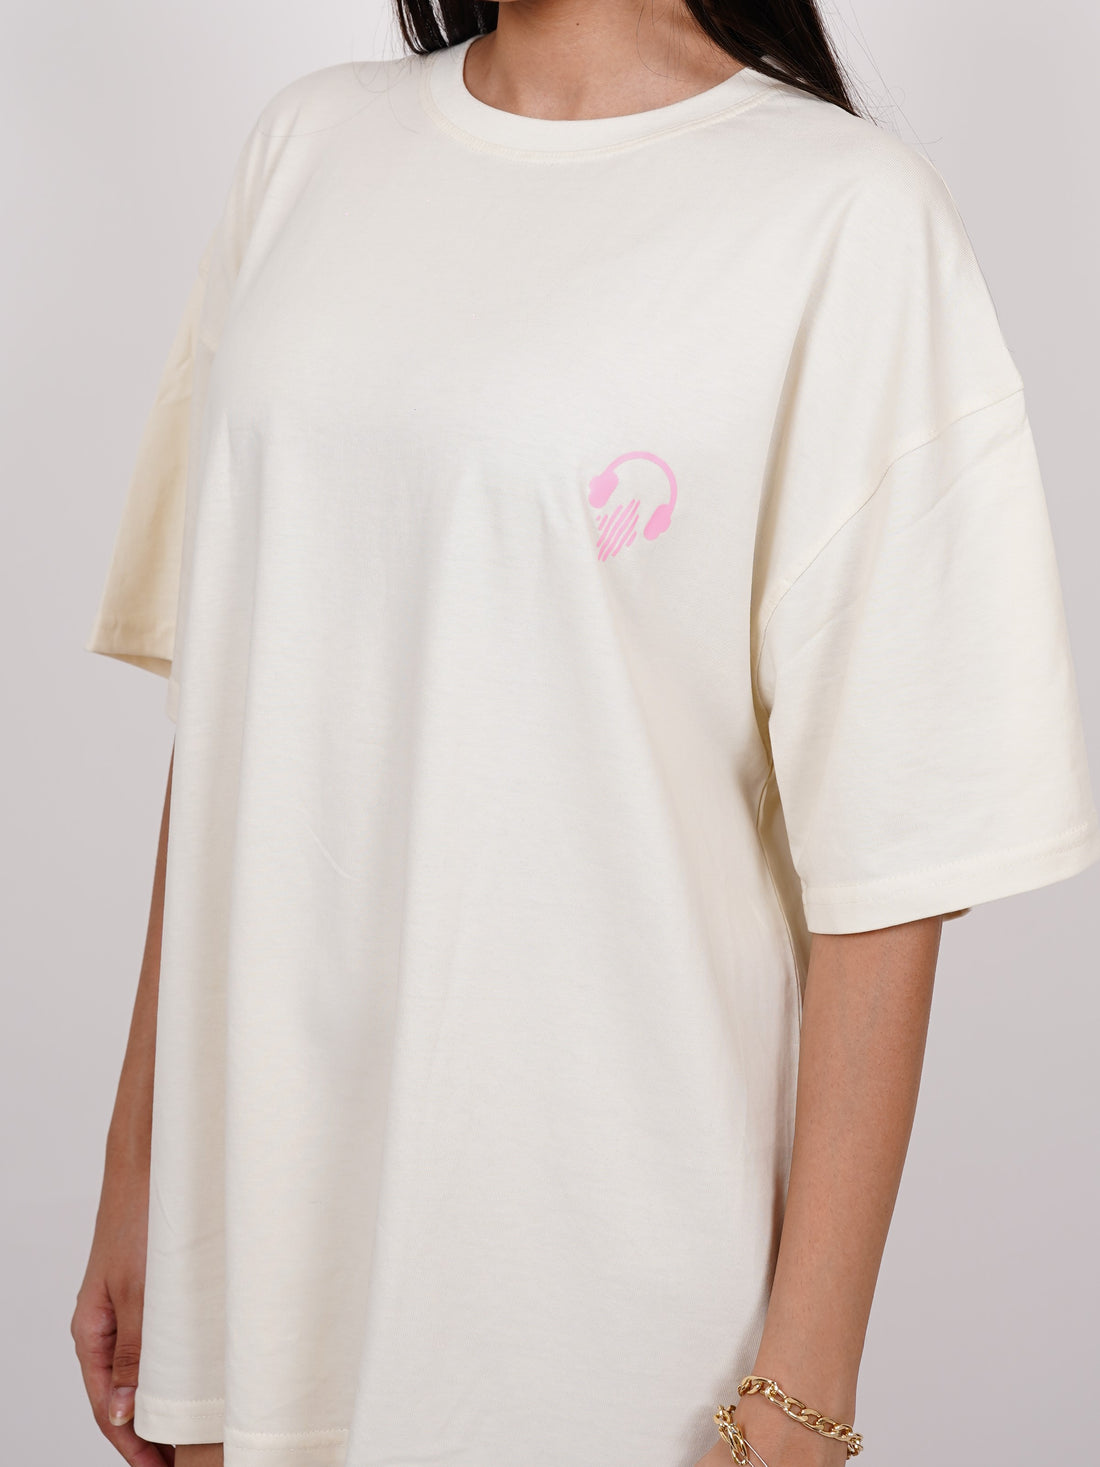 We Love Techno (Pink Glow) Drop-Sleeved Tee (T-shirt)